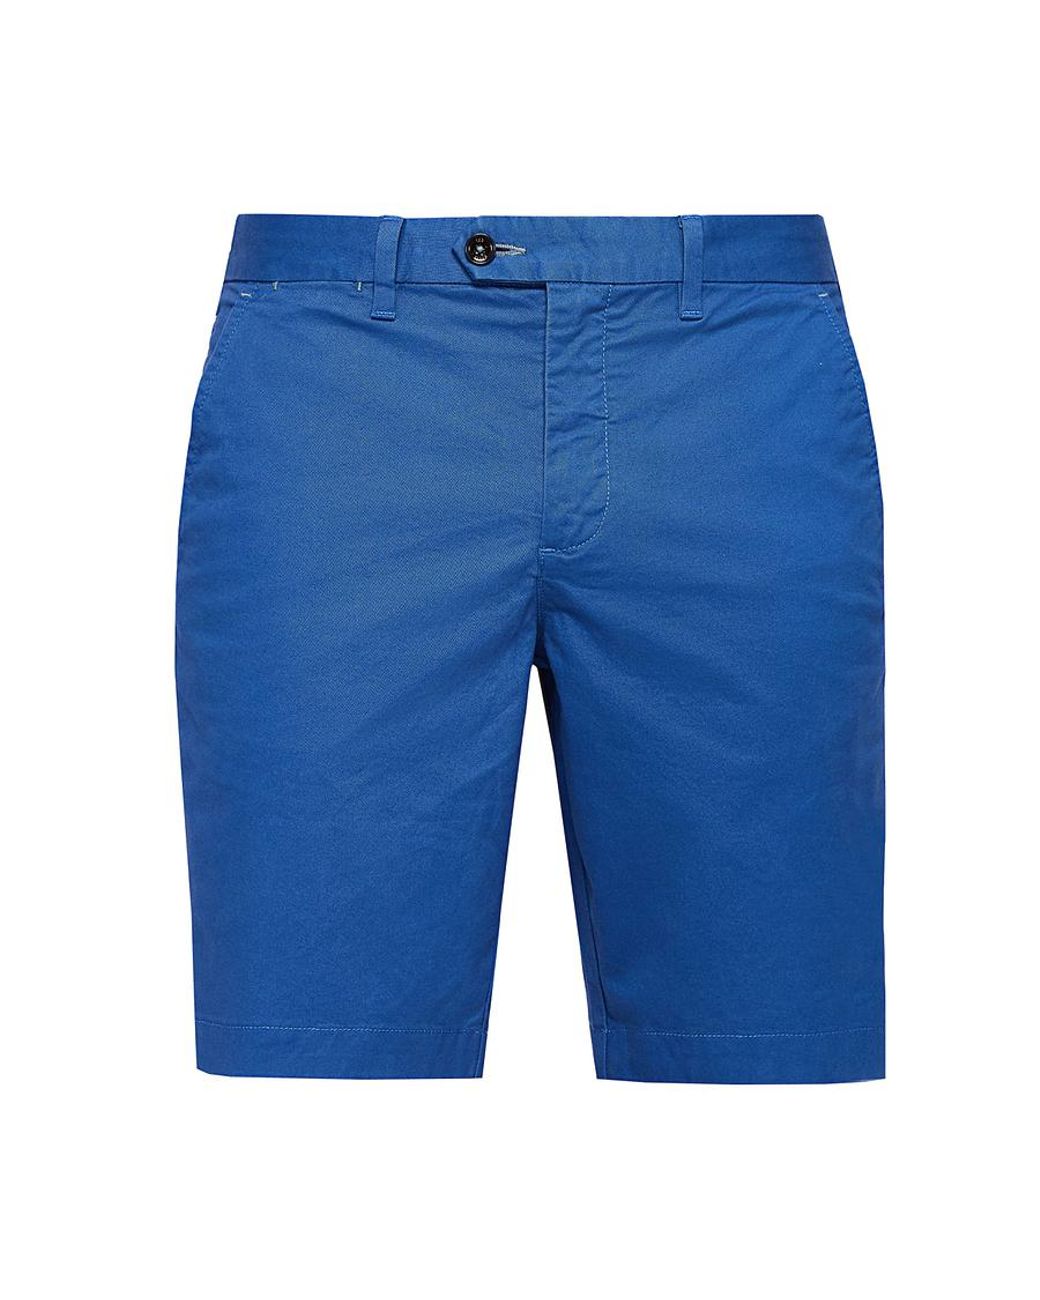 Ted Baker Cotton Proshor Plain Chino Shorts in Blue for Men - Lyst